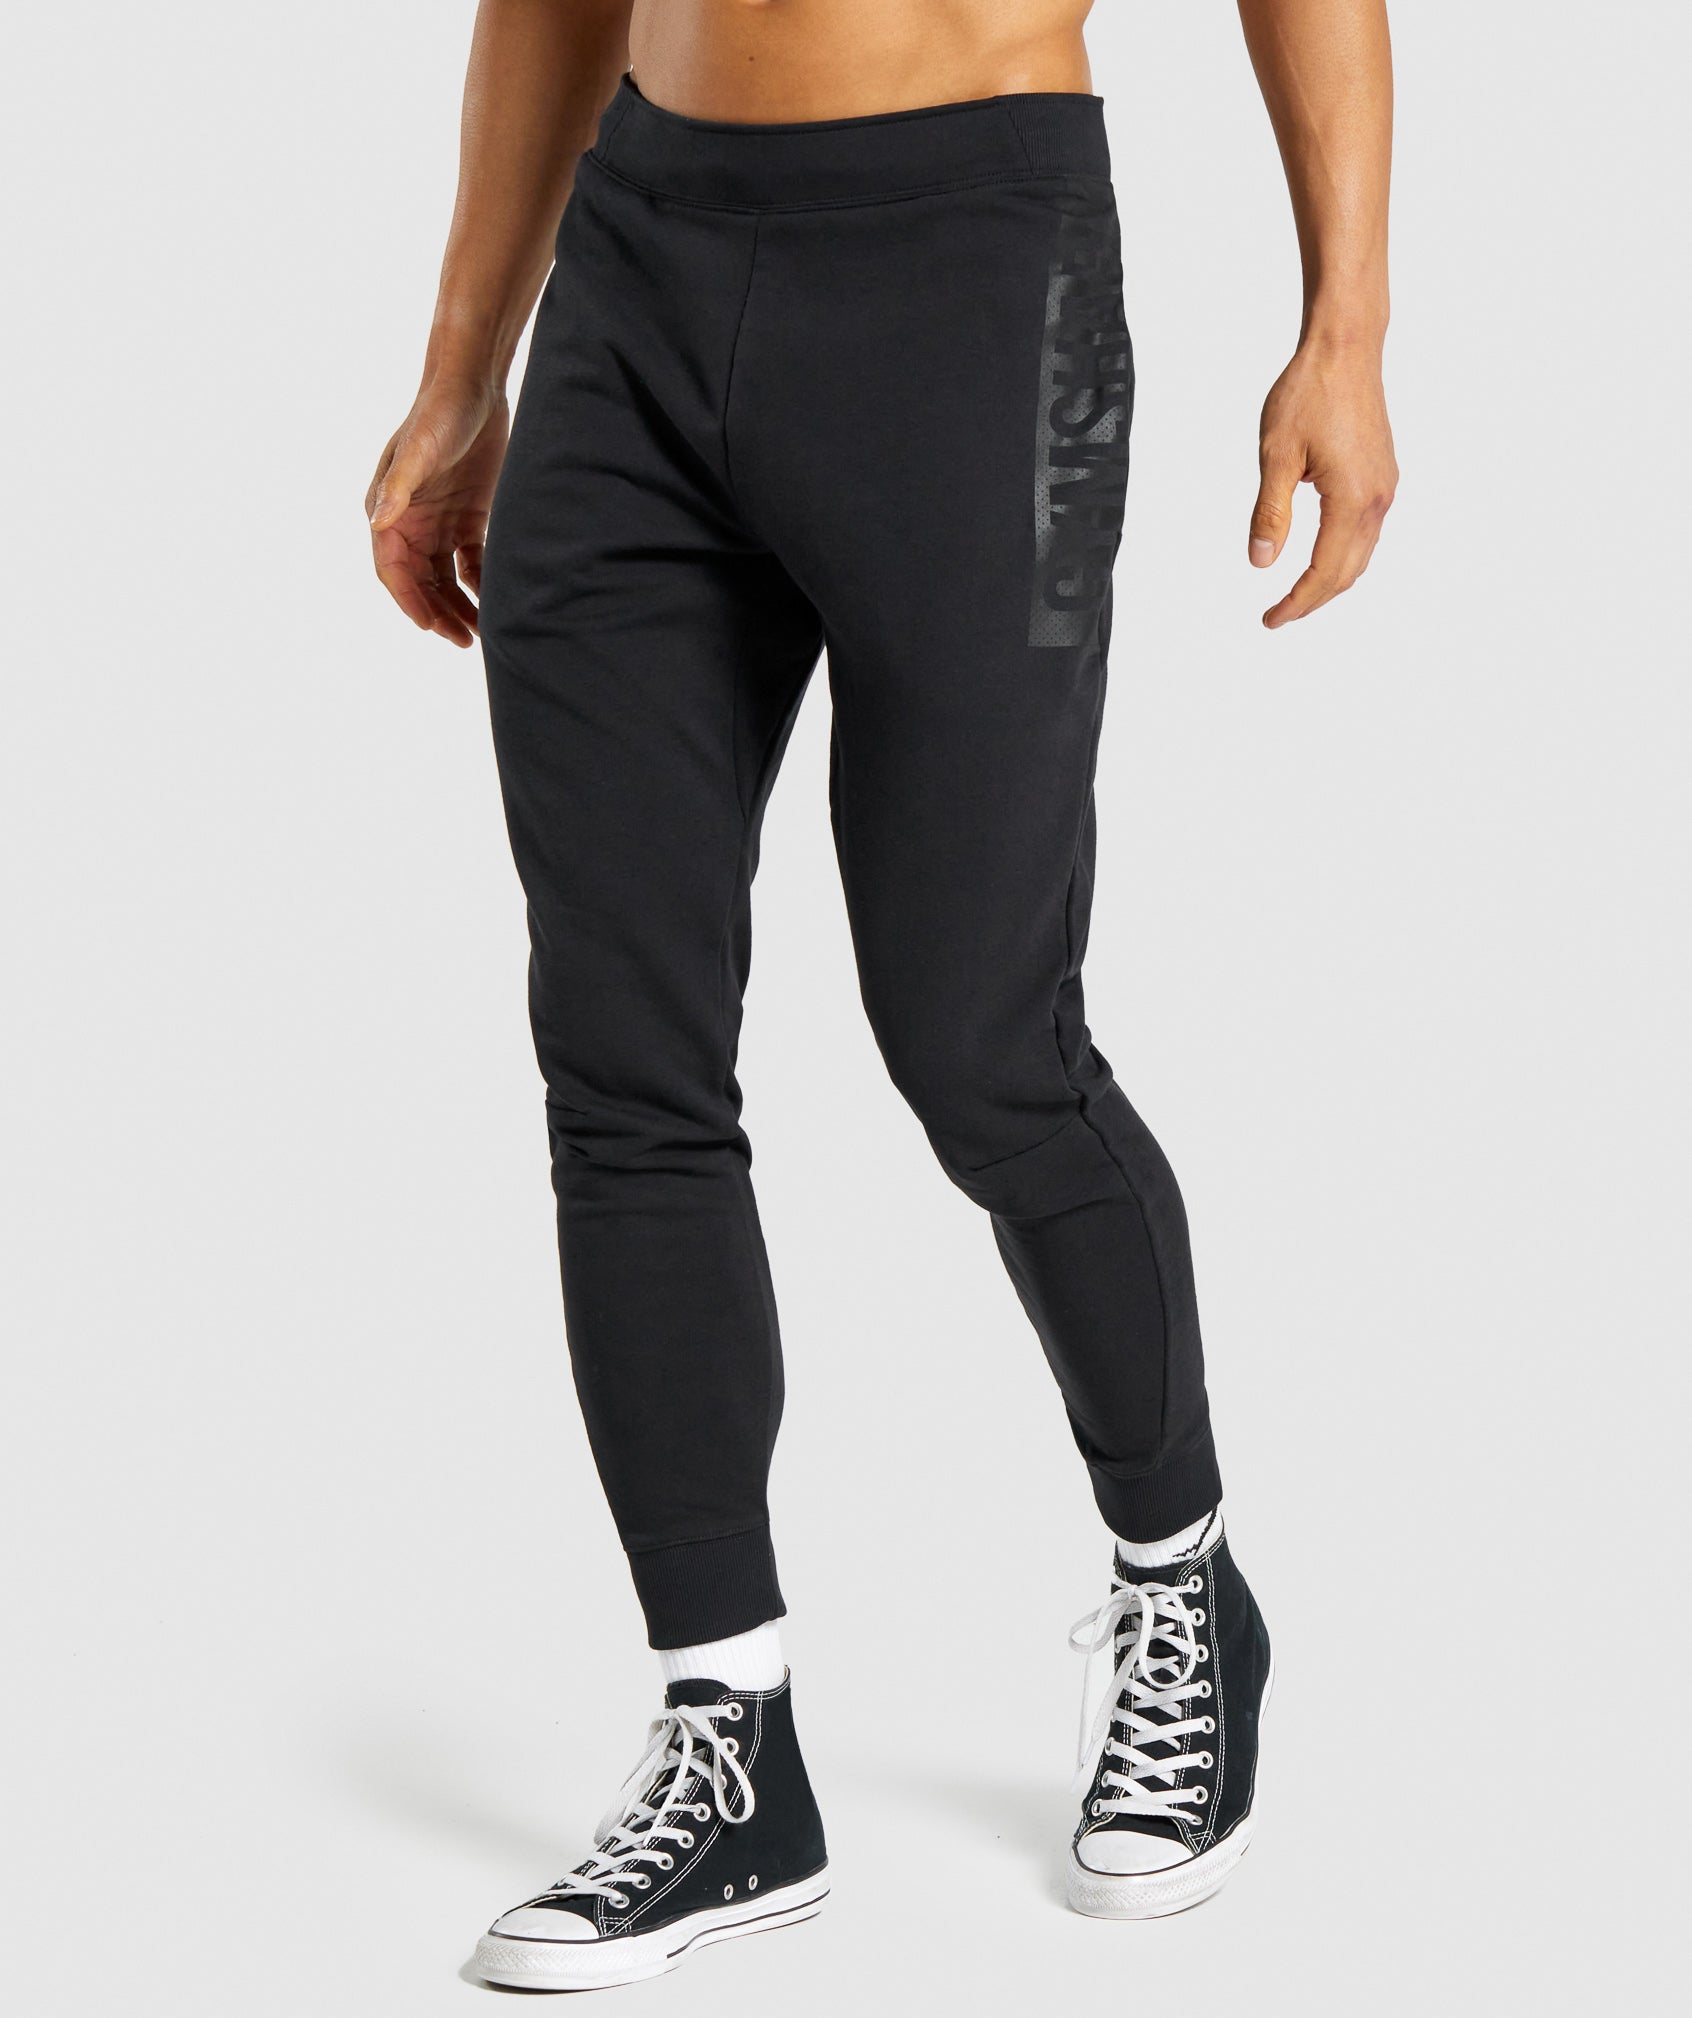 Gymshark Joggers Sweatpants, Men's Small Black, Ankle Zip & Pockets, Logo